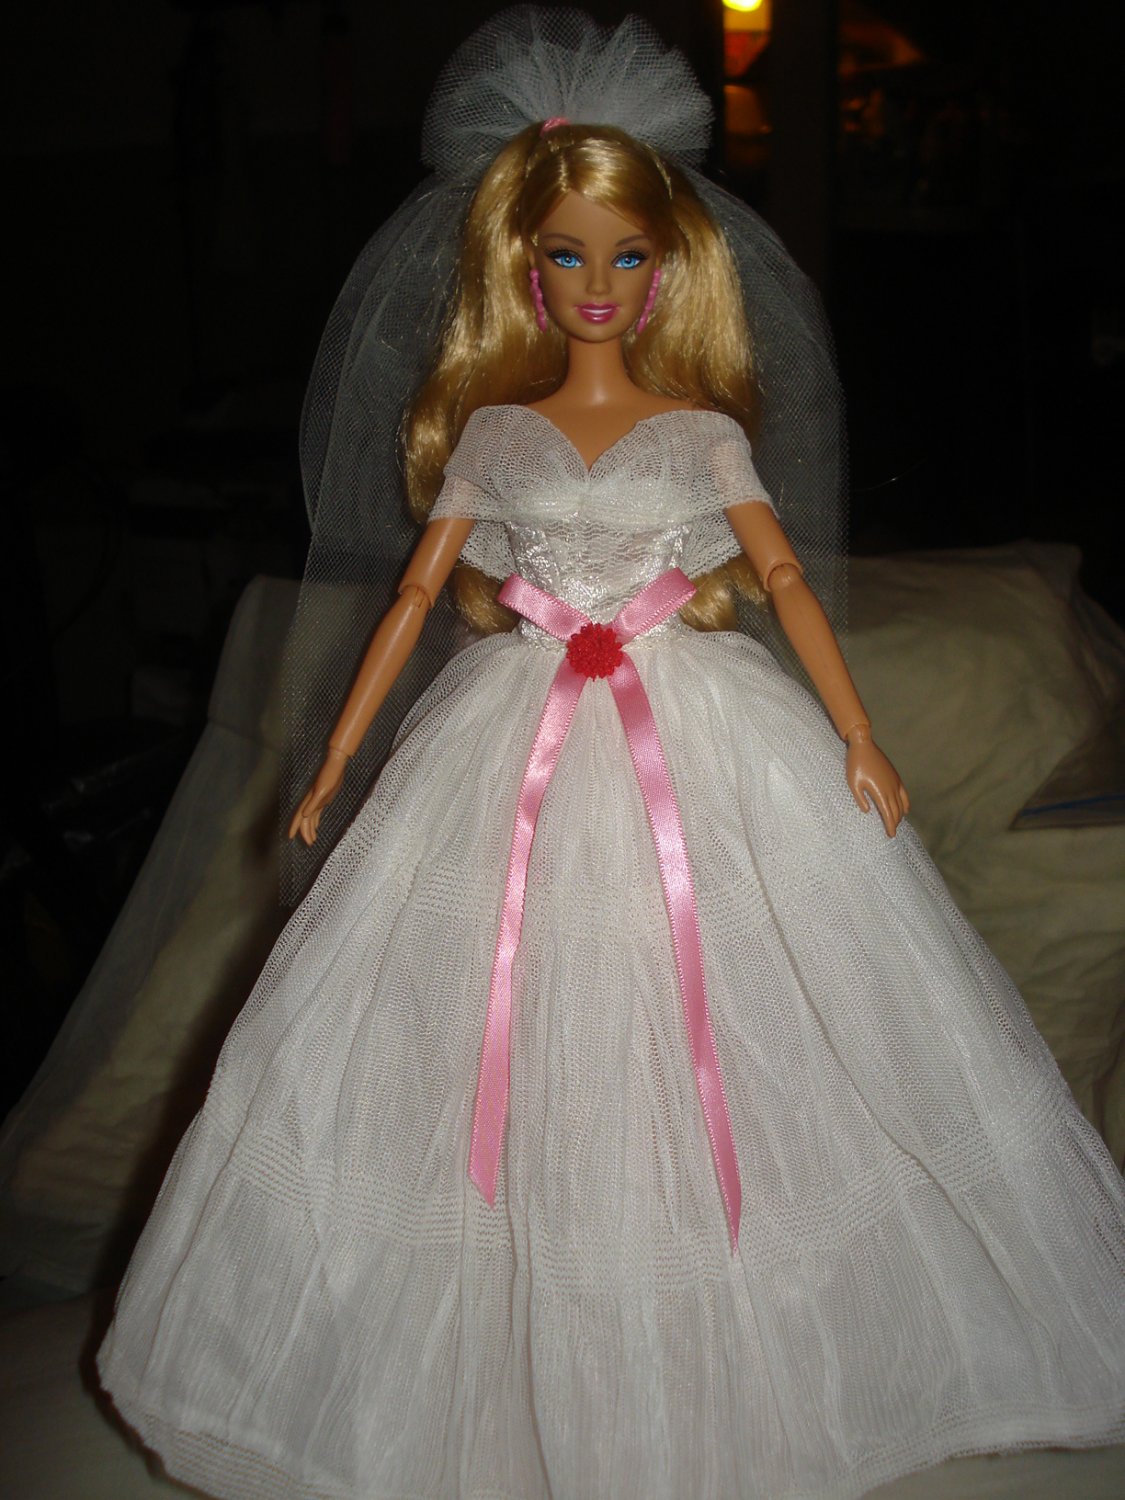 Beautiful Barbie wedding dress with pink sash, veil & shoes - ed109